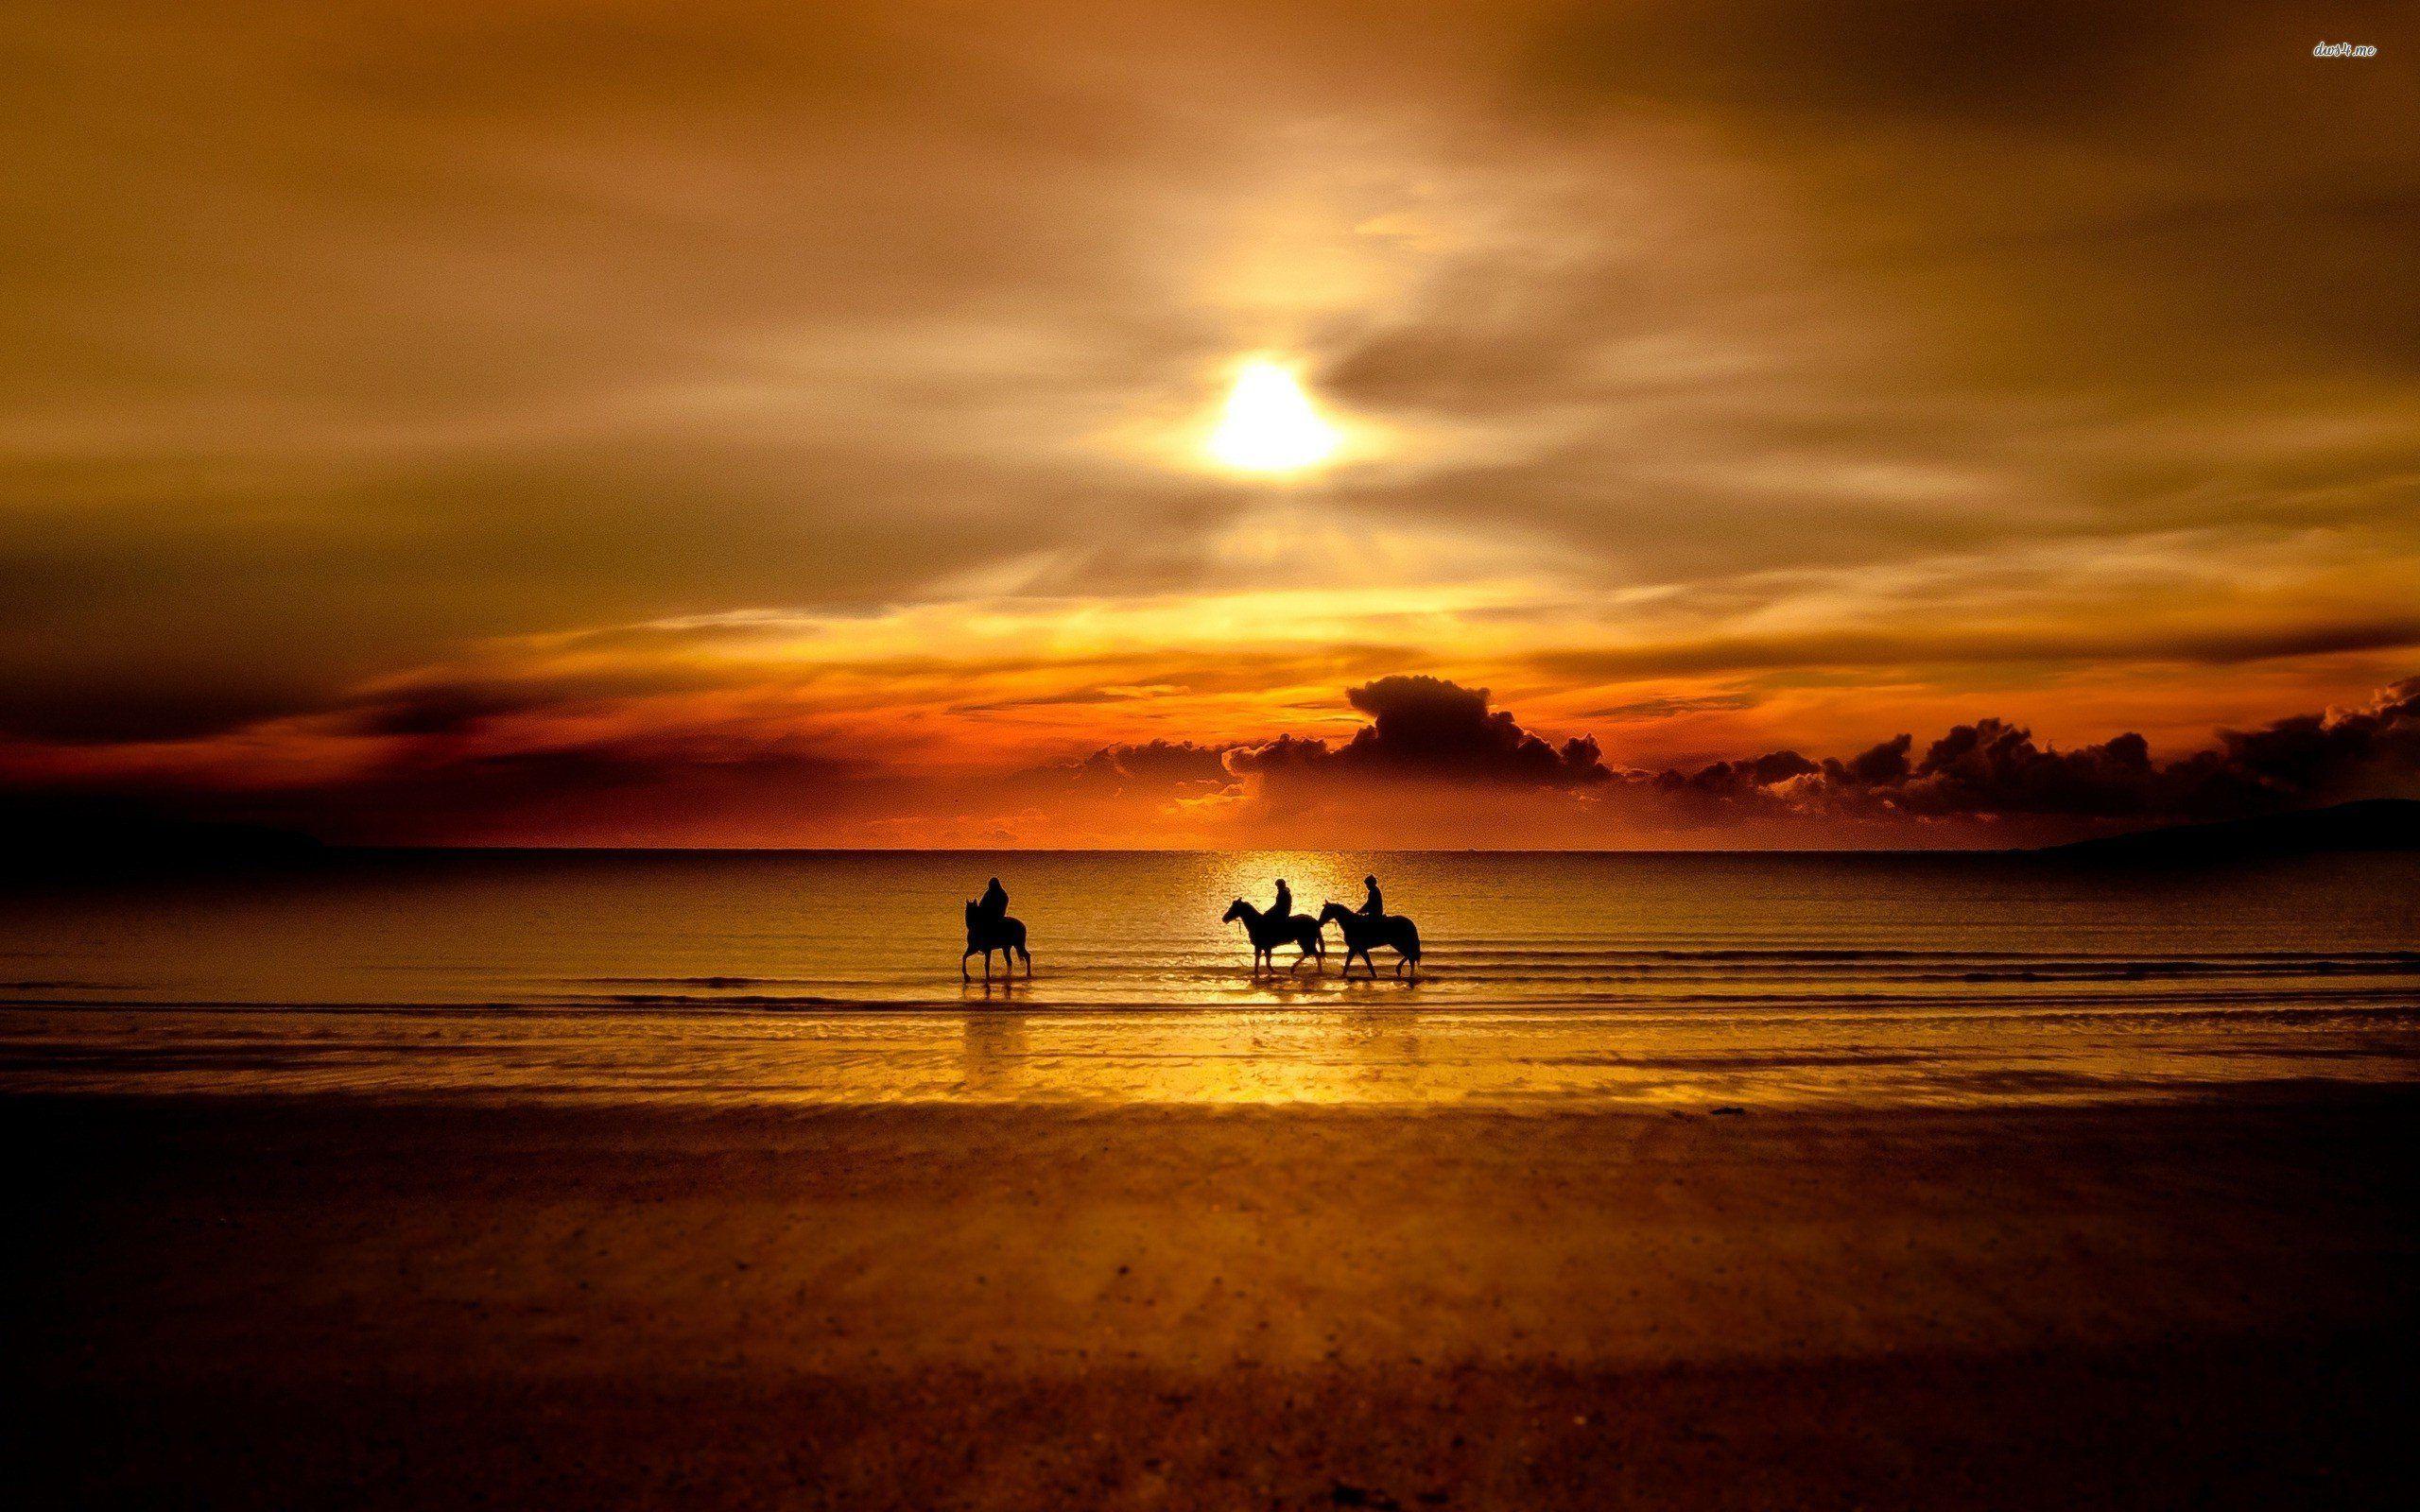 Horseback Riding In The Sunset